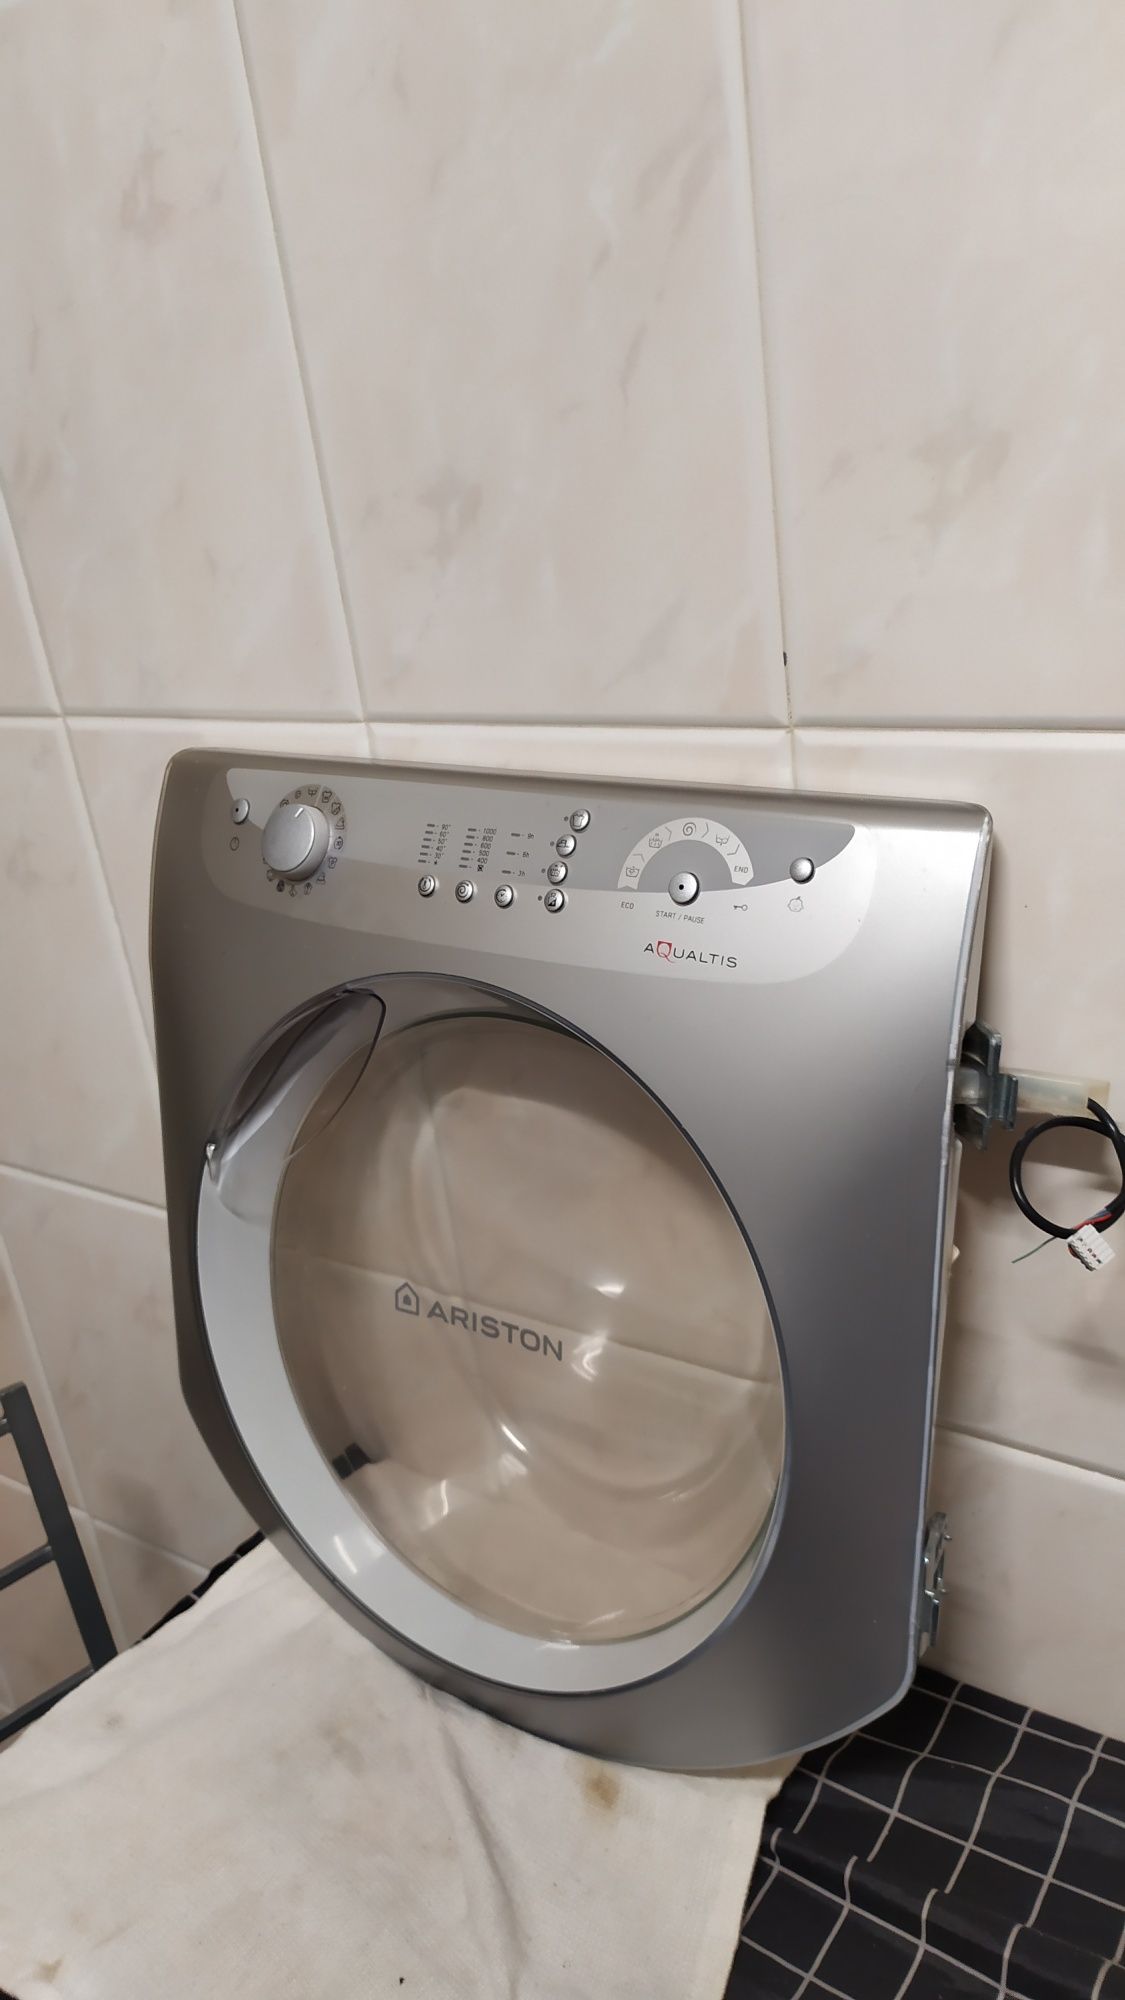 Peças máquina de lavar roupa Ariston hotpoint AQXXL 109